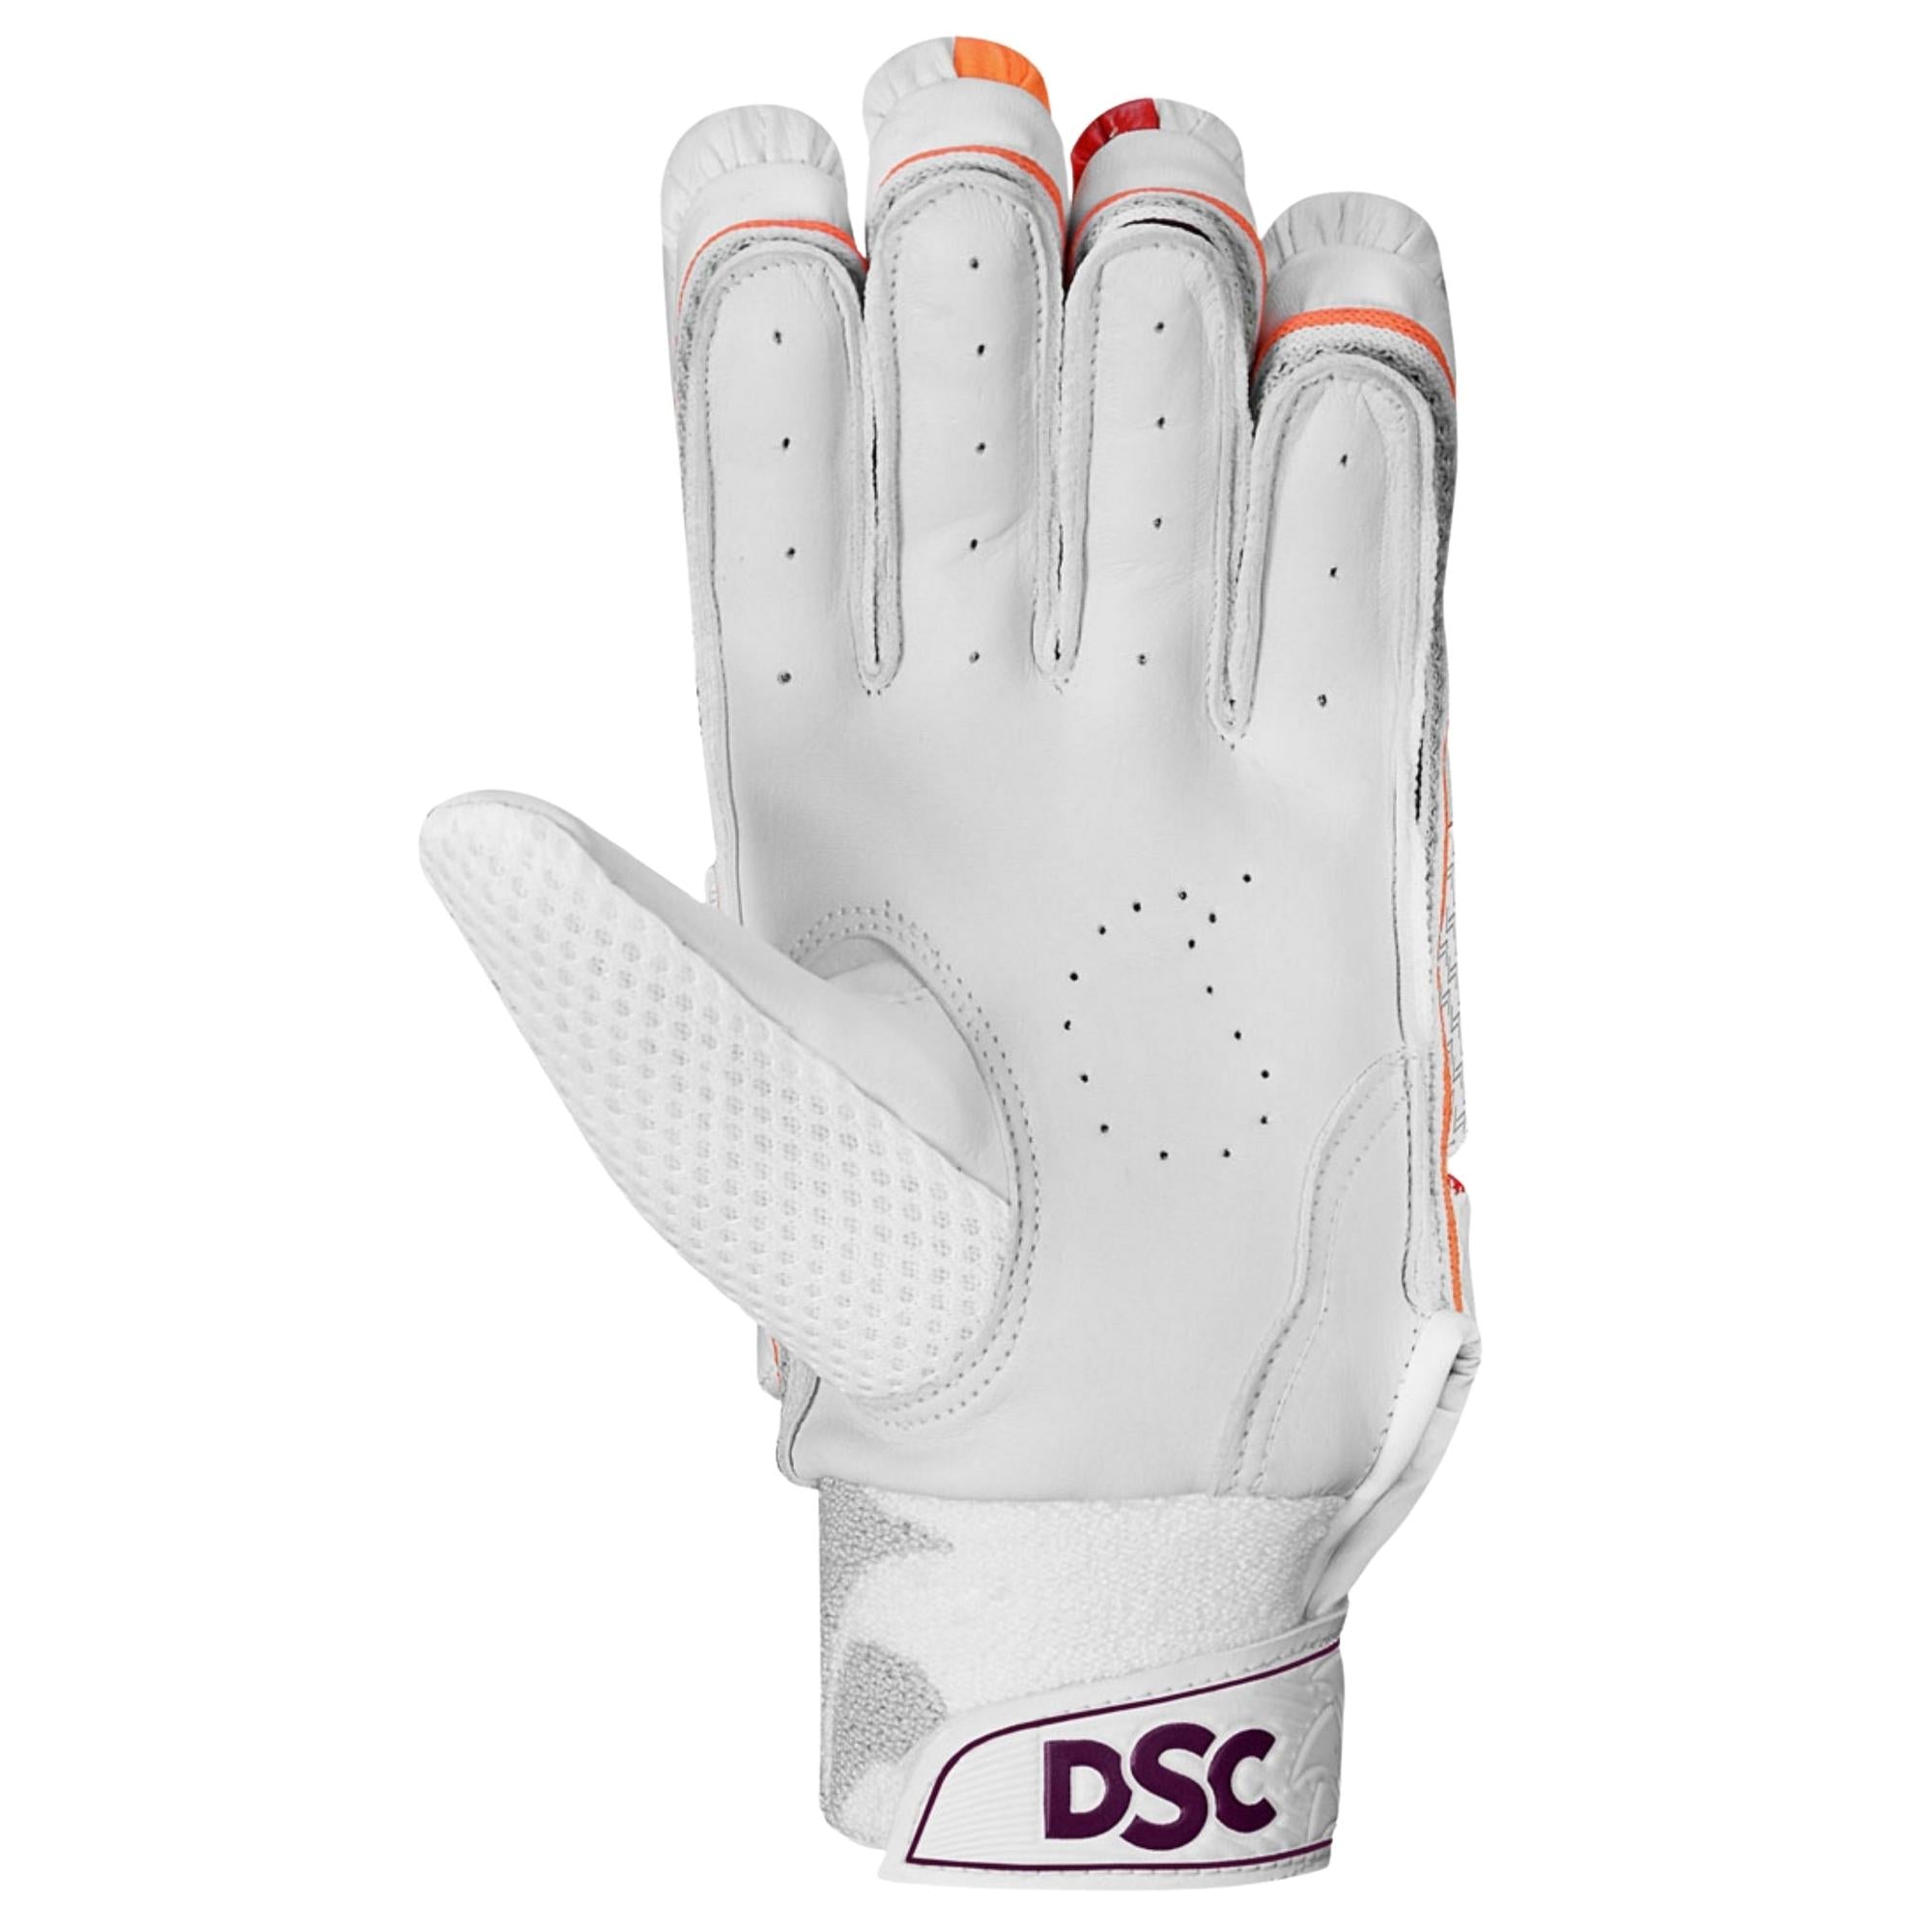 DSC Batting Gloves Intense Shock